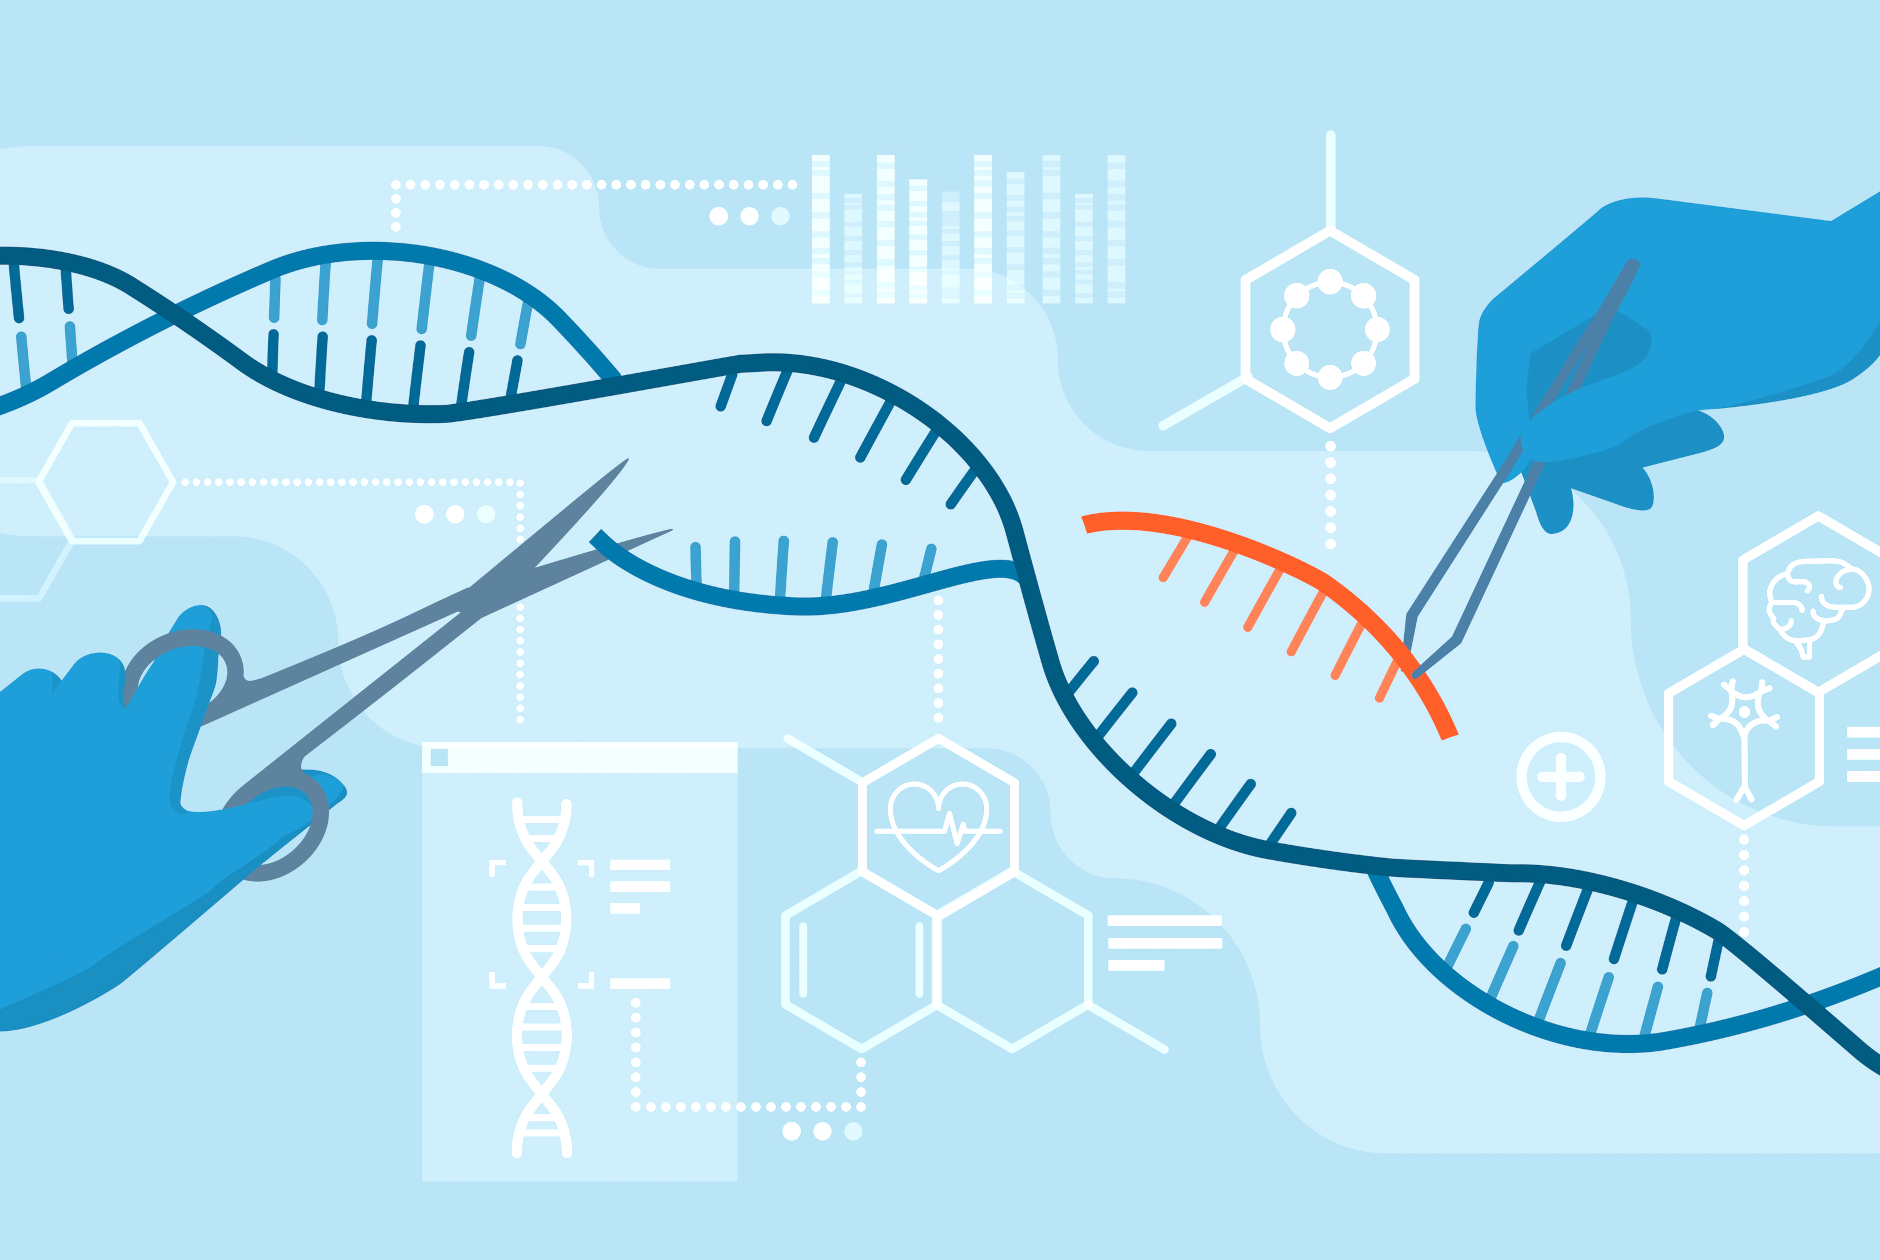 Biotechnology Breakthroughs: CRISPR, Gene Editing, and Medical Milestones